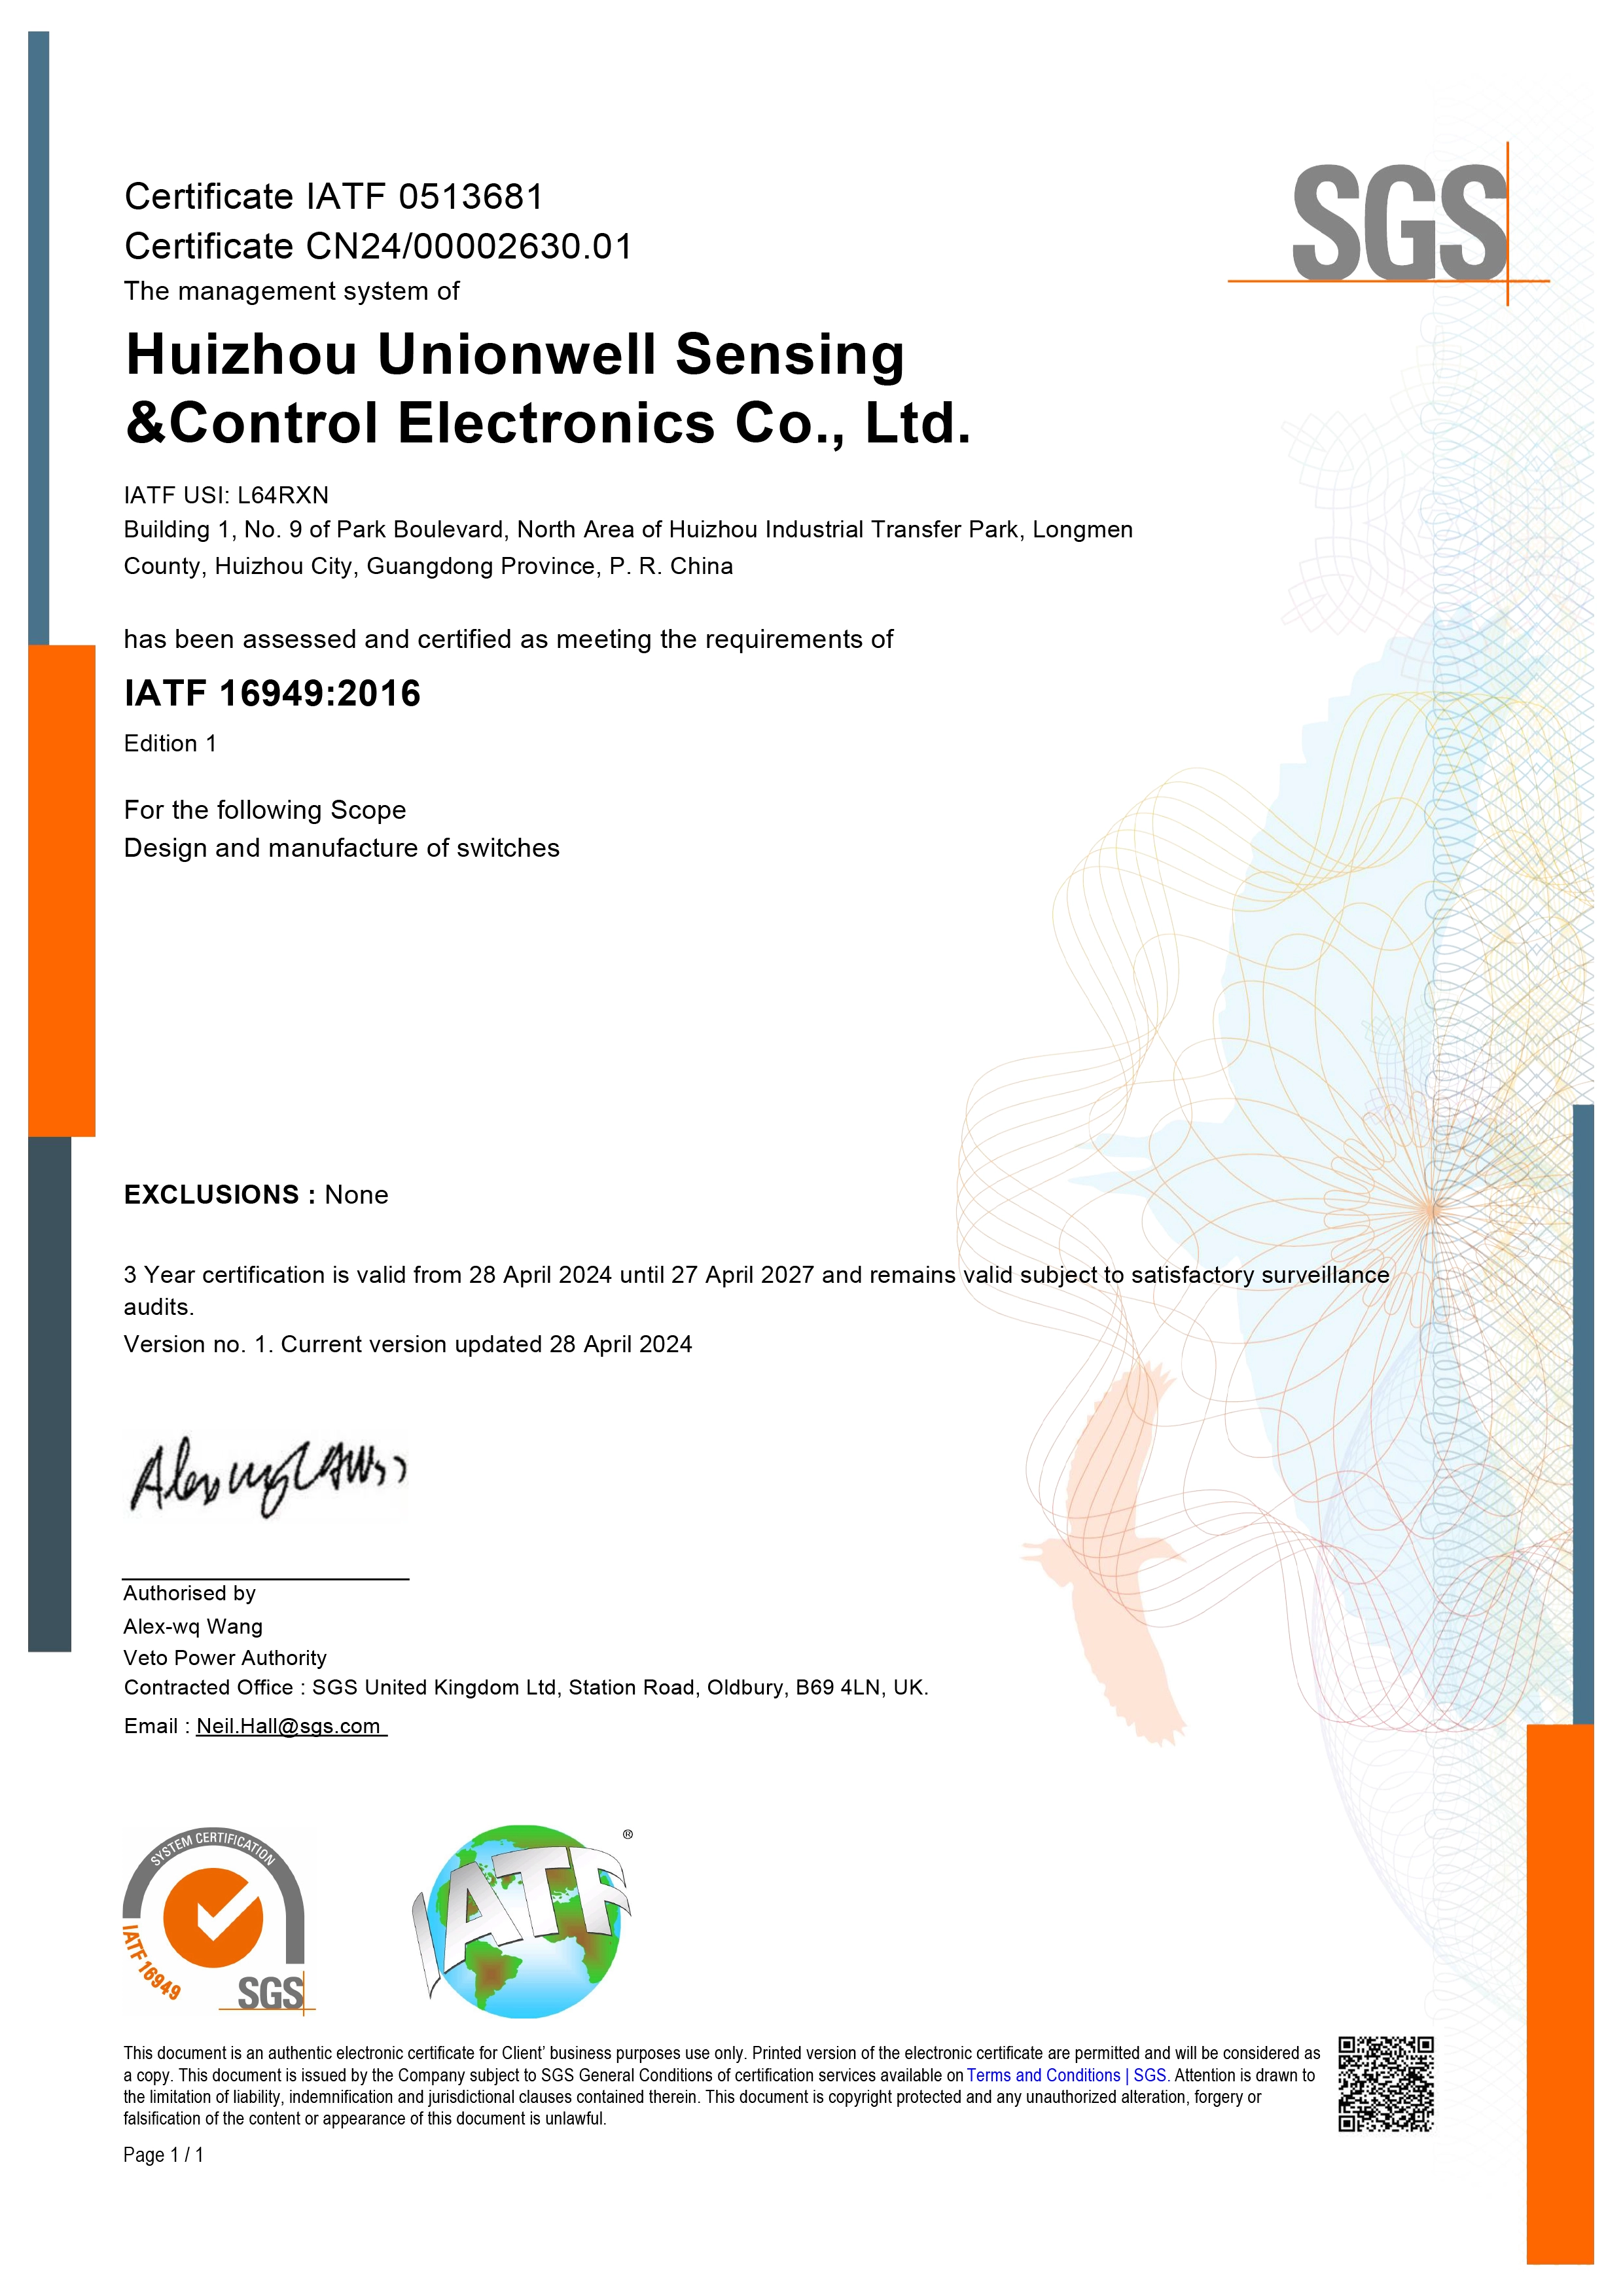 unionwell iatf16949 certificate 1